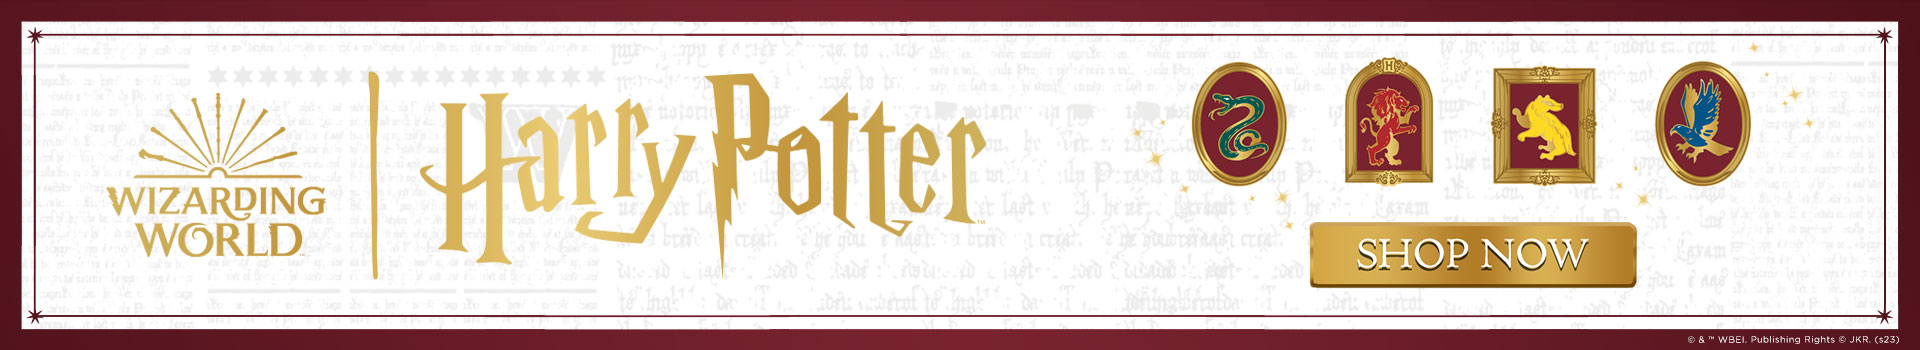 Harry Potter top banner